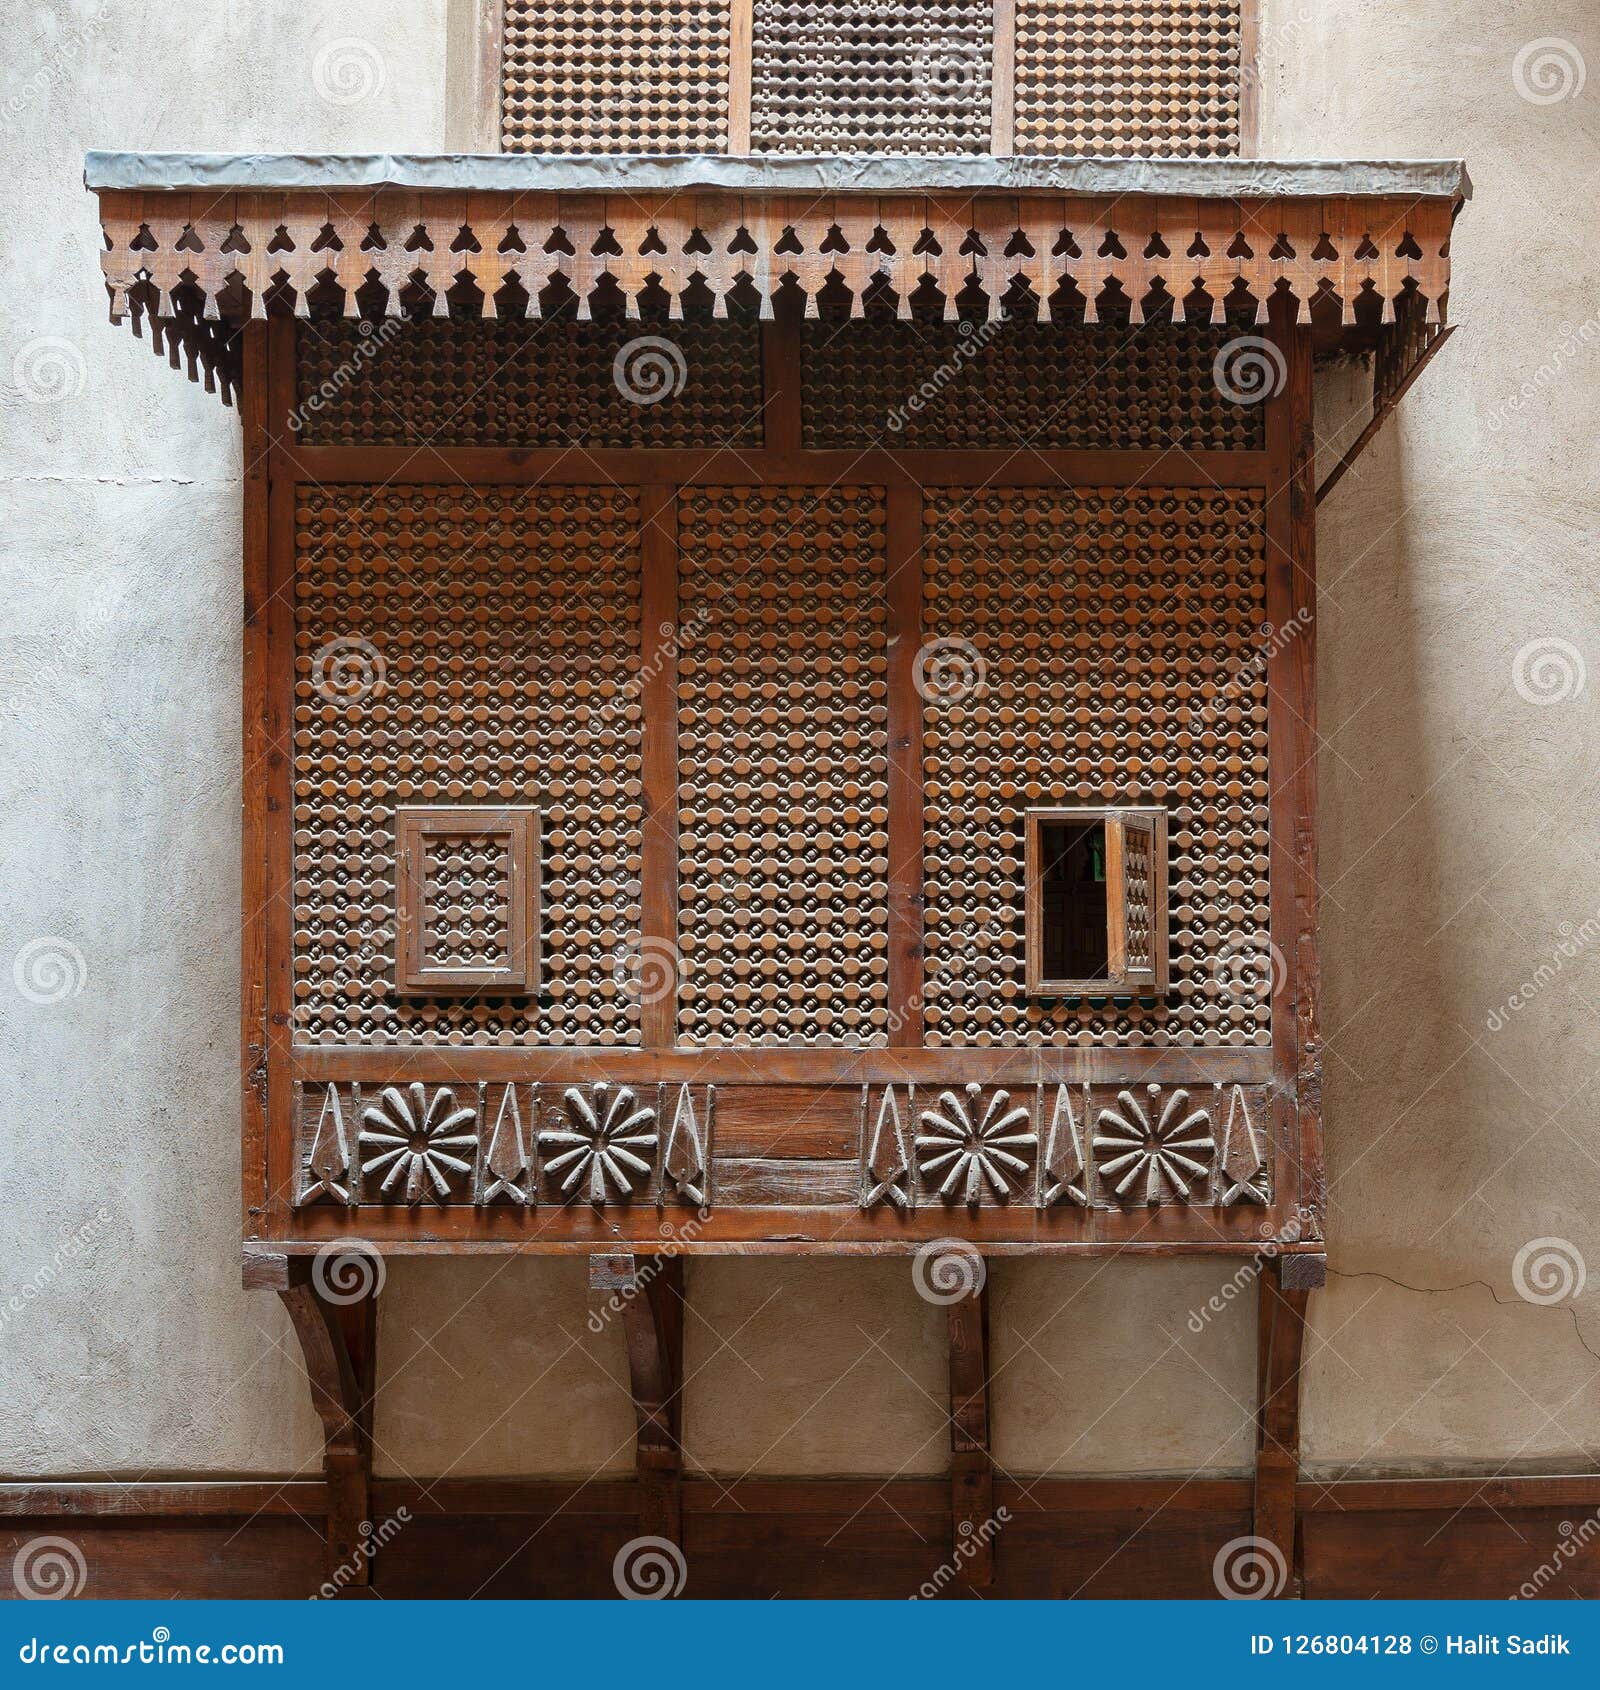 mamluk era style oriel window covered by interleaved wooden grid mashrabiya on stone wall, cairo, egypt